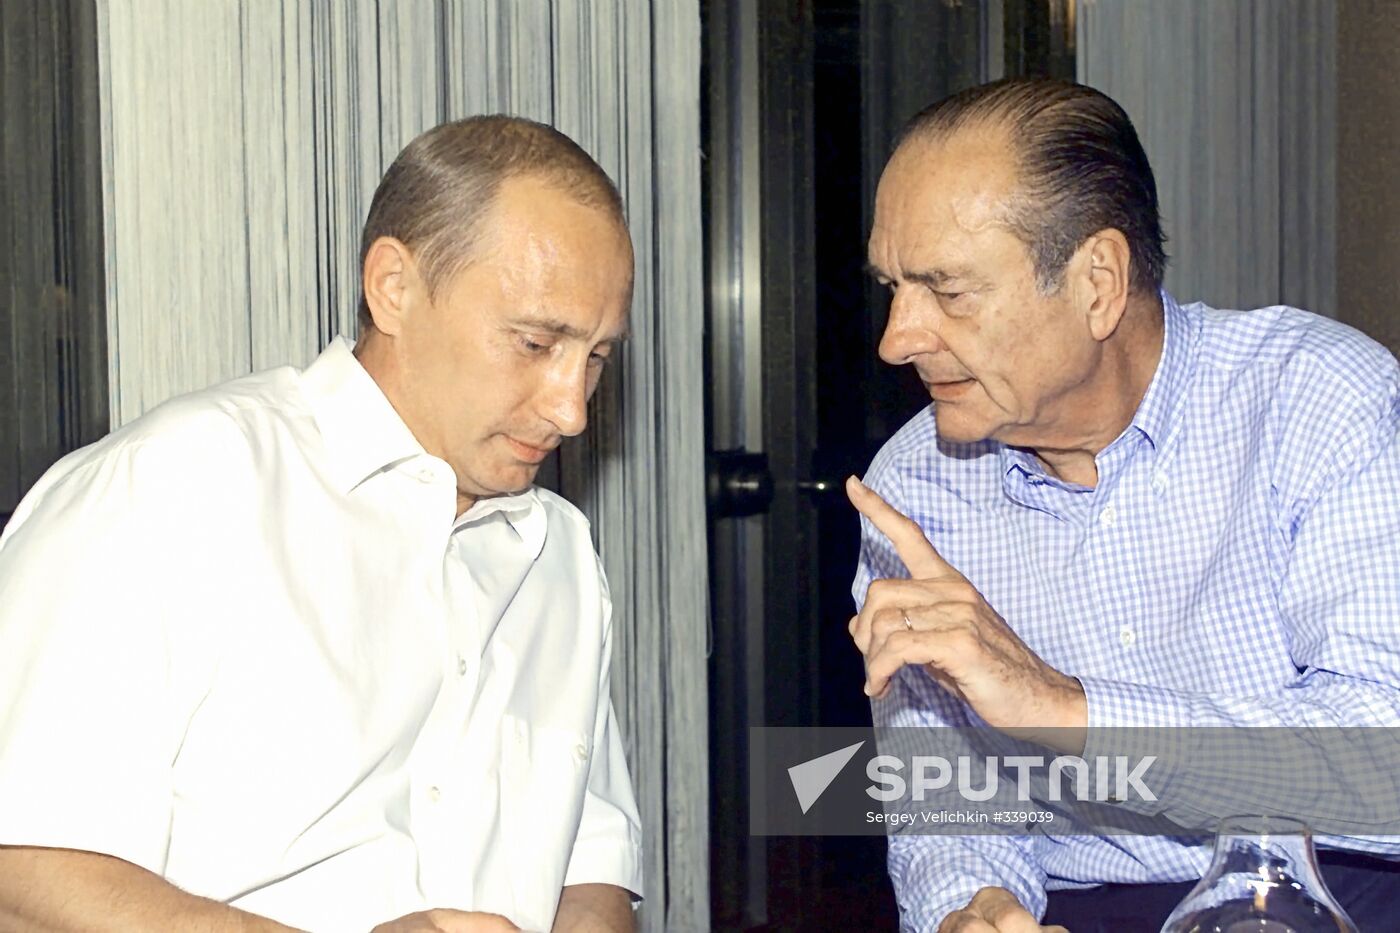 Vladimir Putin and Jacques Chirac